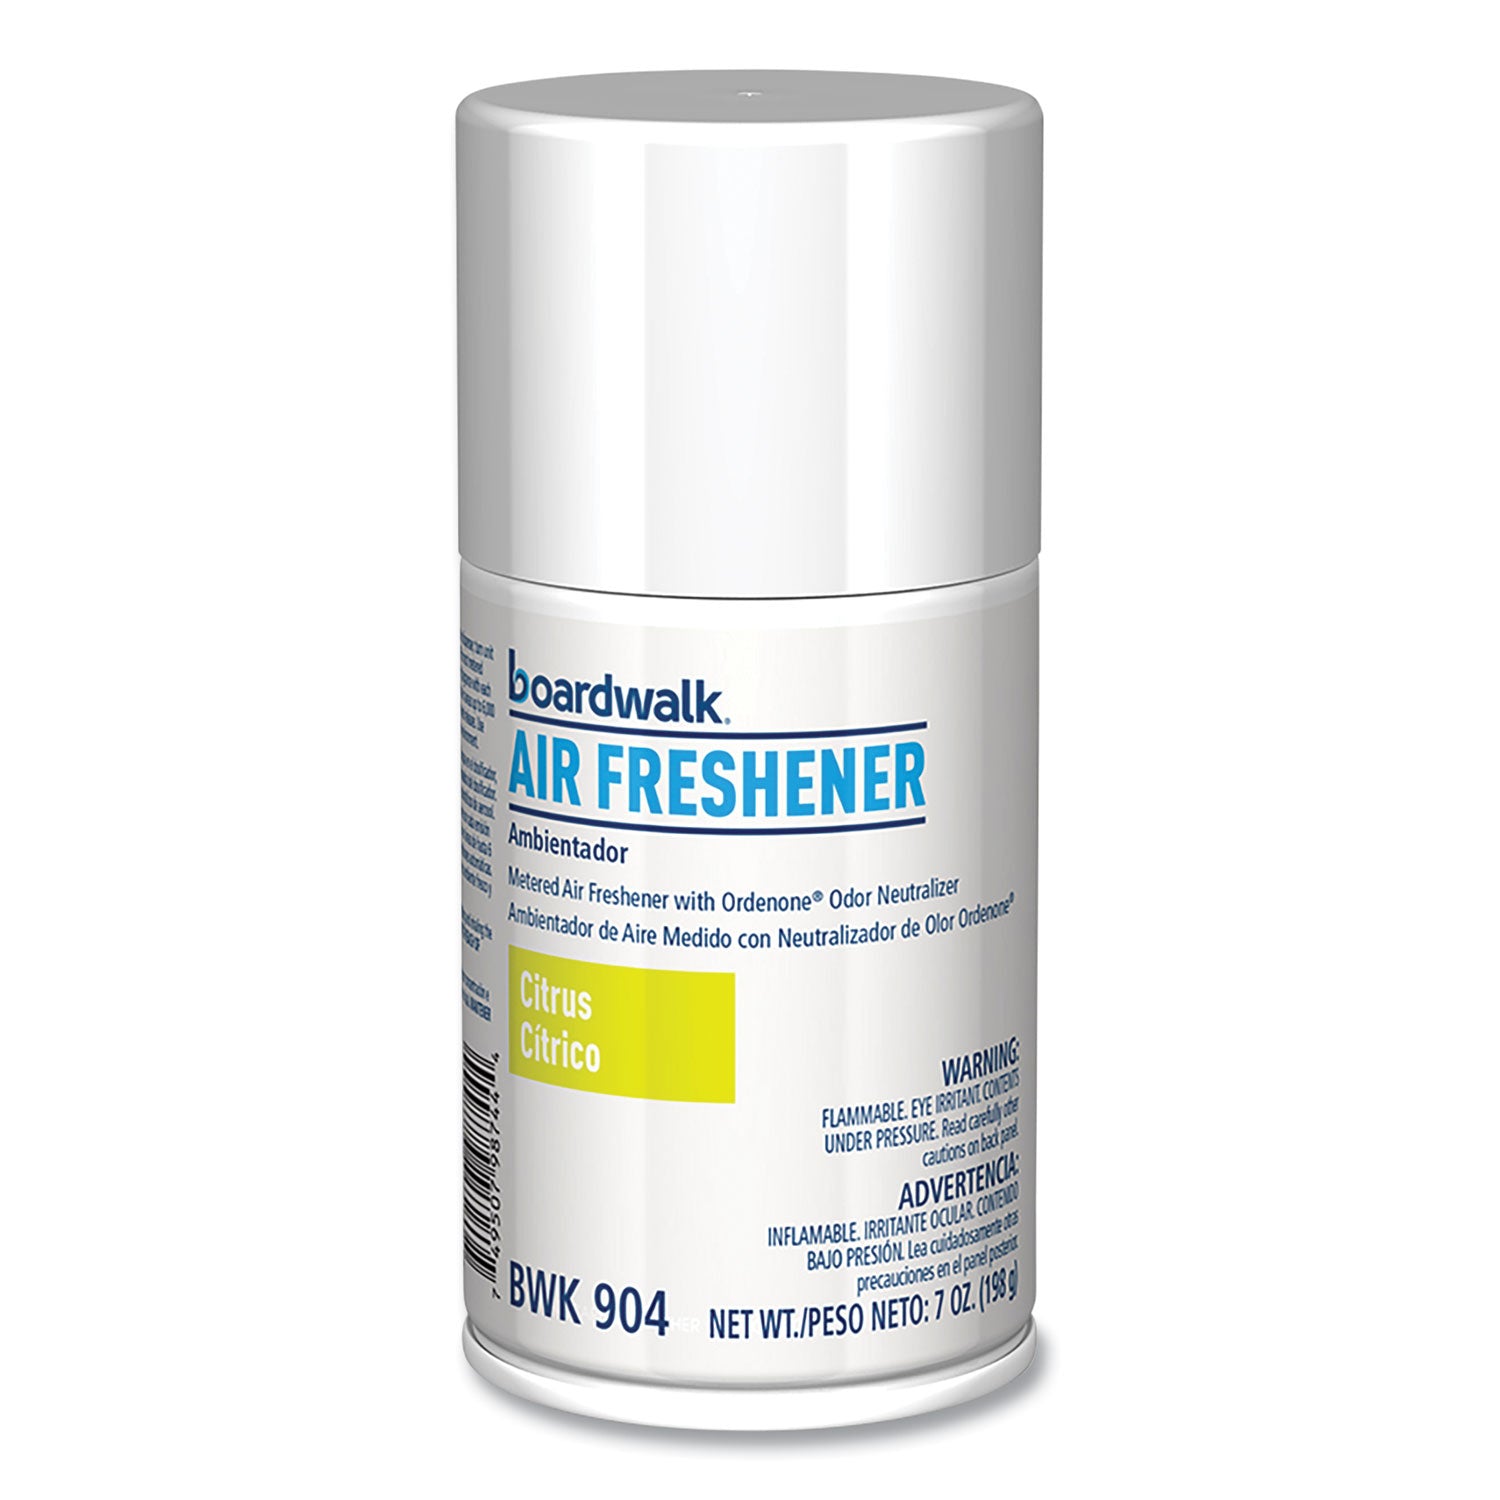 metered-air-freshener-refill-citrus-sunrise-53-oz-aerosol-spray-12-carton_bwk904 - 2